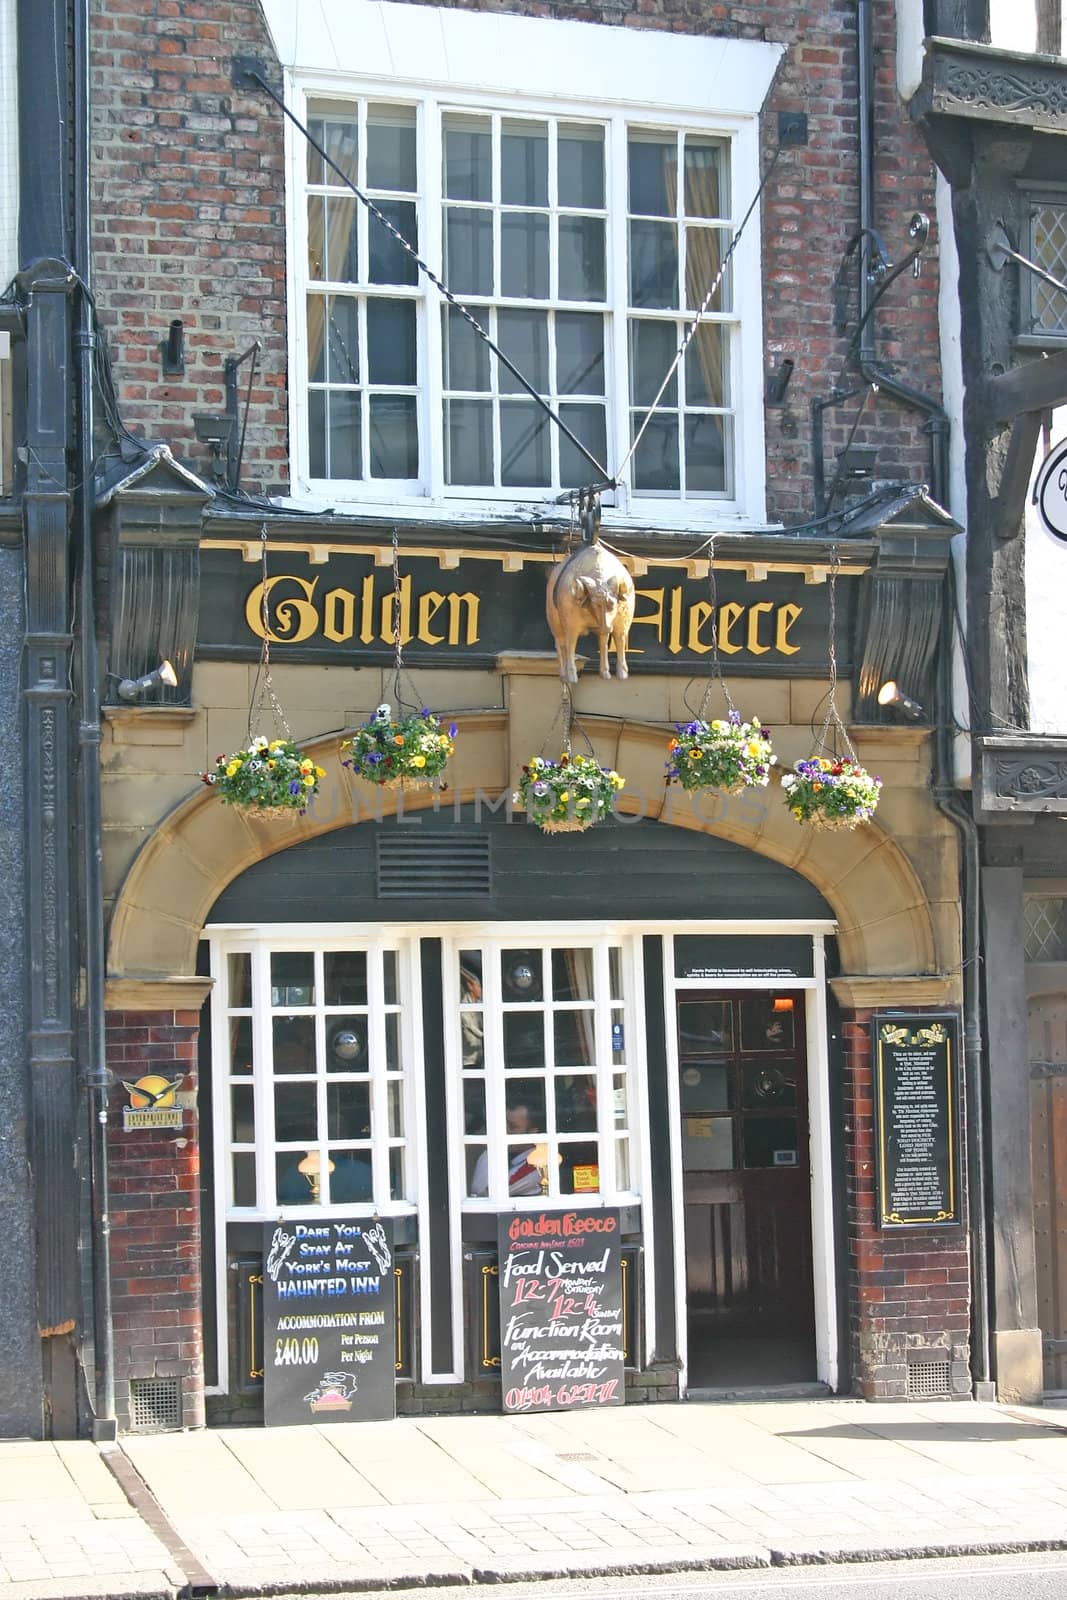 Golden Fleece Pub in York England by green308